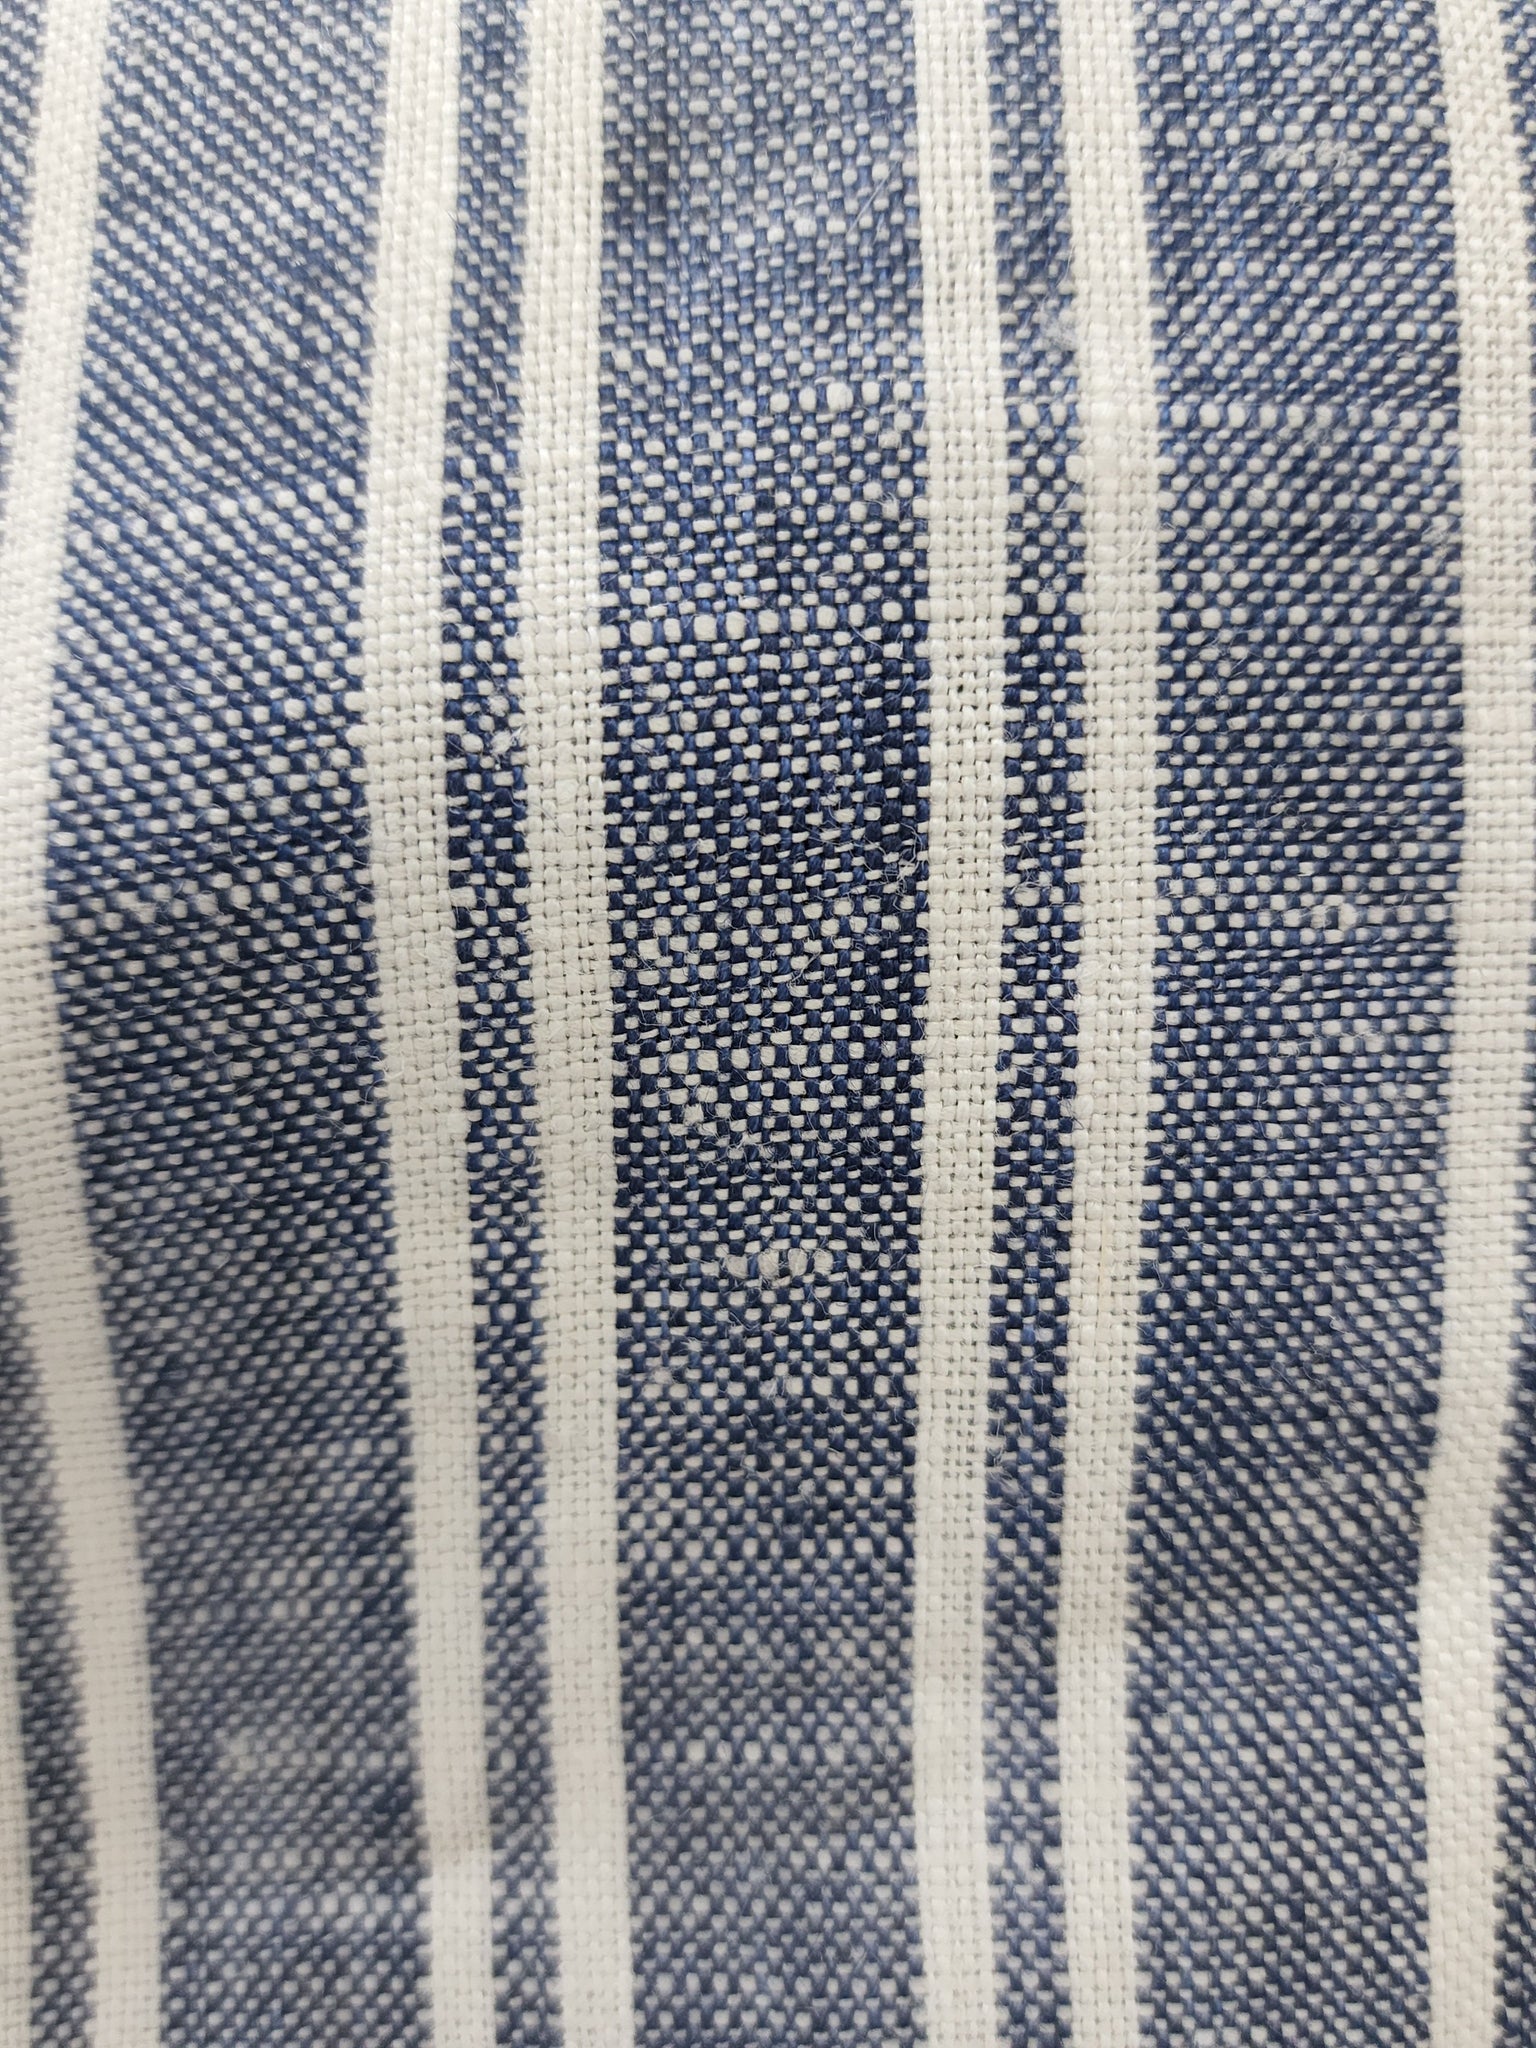 BLUE JAY - Linen Weave Fabric - 1 Yard